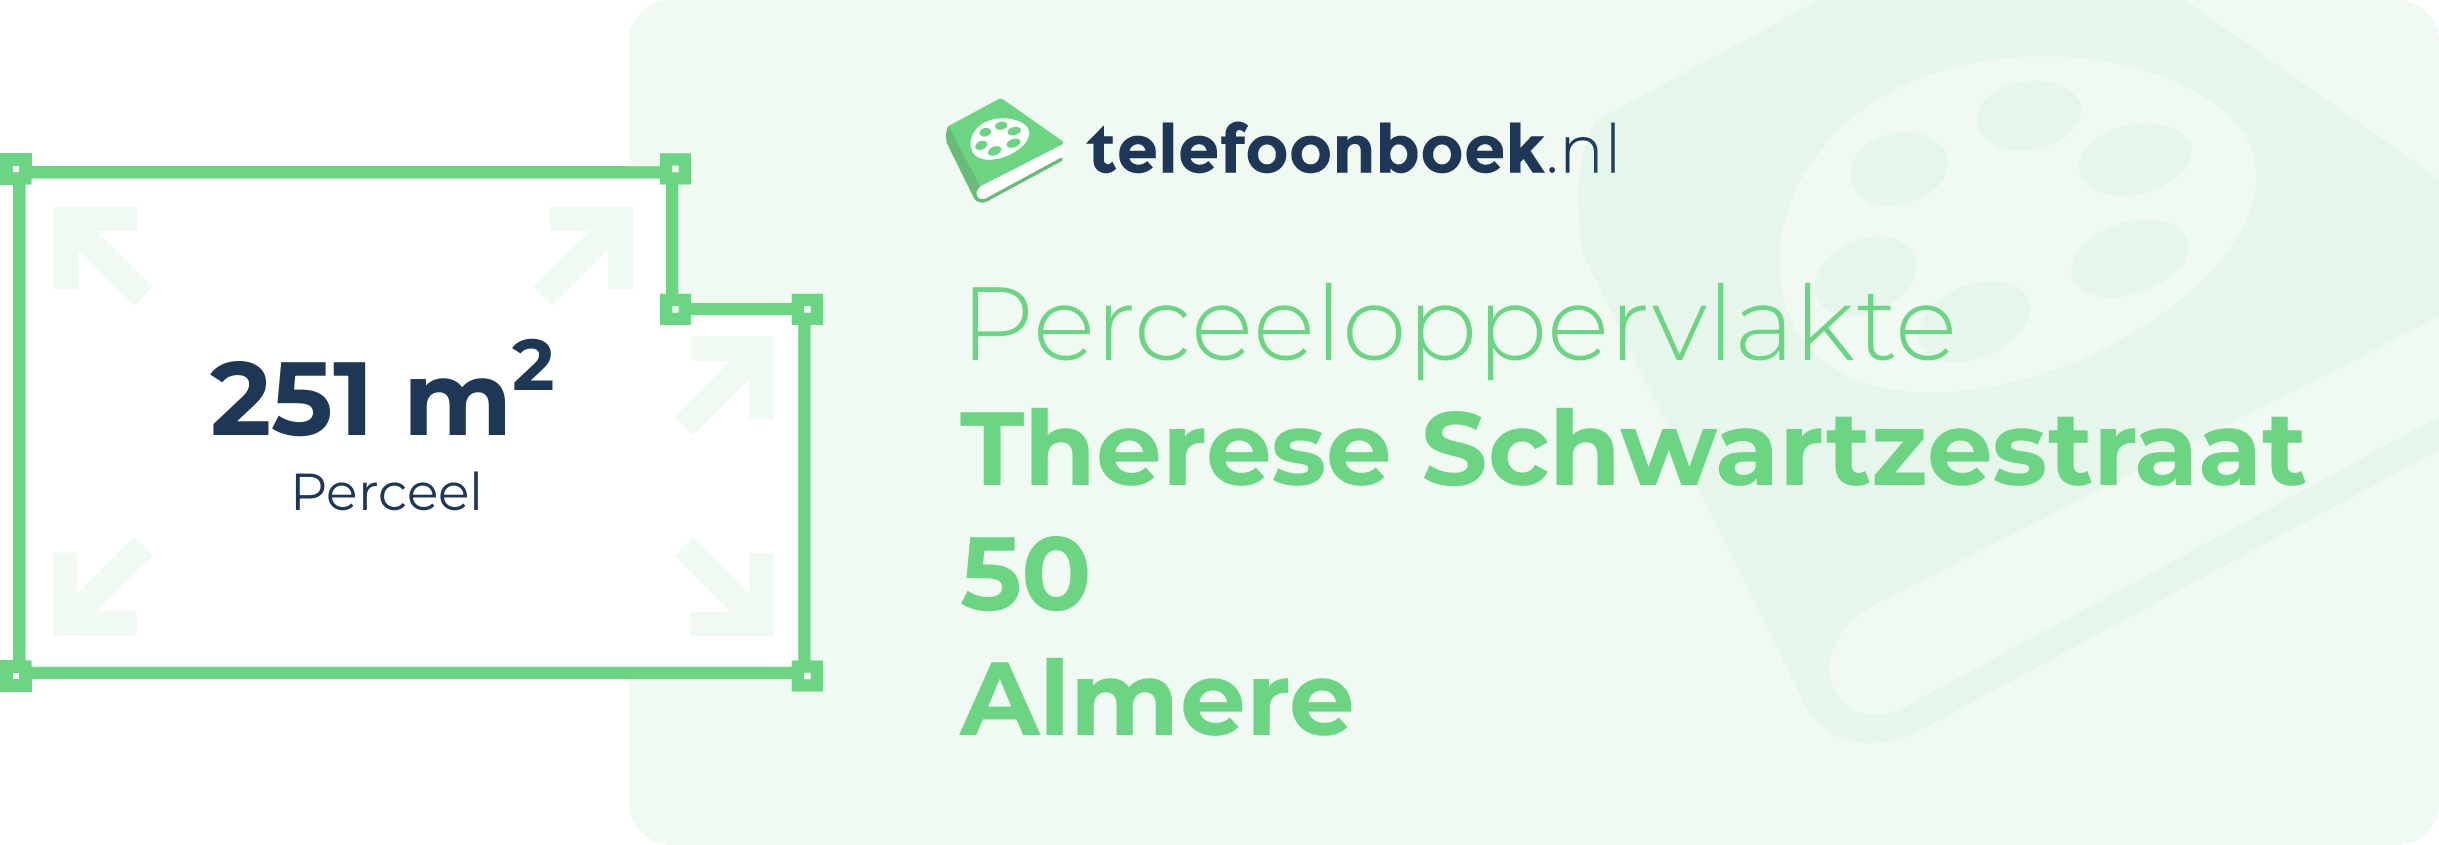 Perceeloppervlakte Therese Schwartzestraat 50 Almere